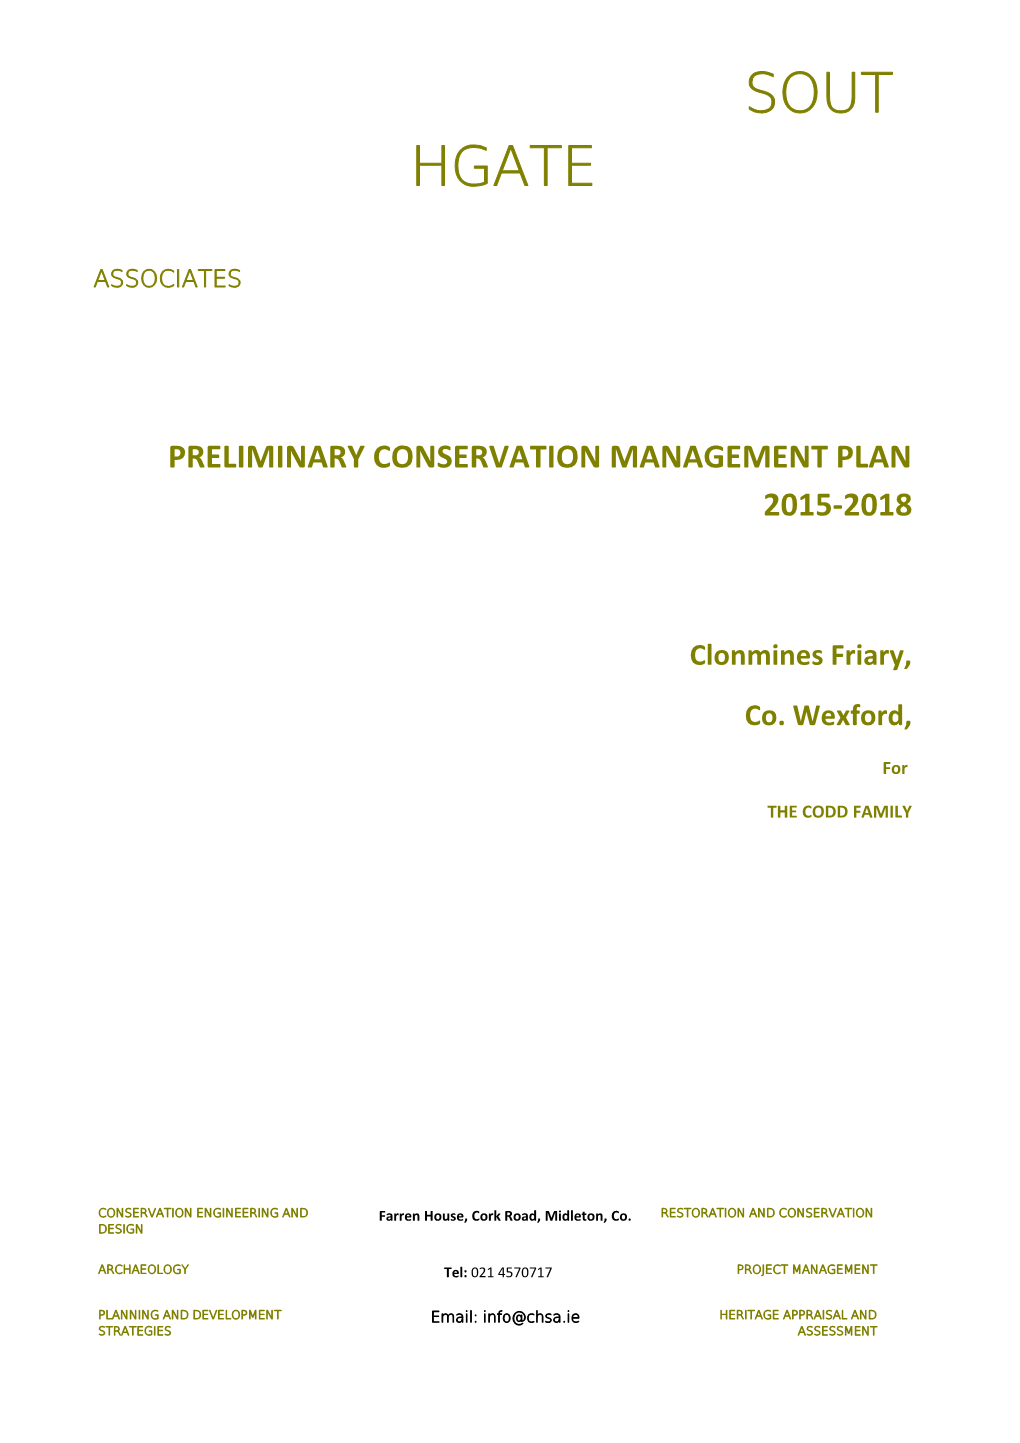 Preliminary Conservation Management Plan 2015-2018